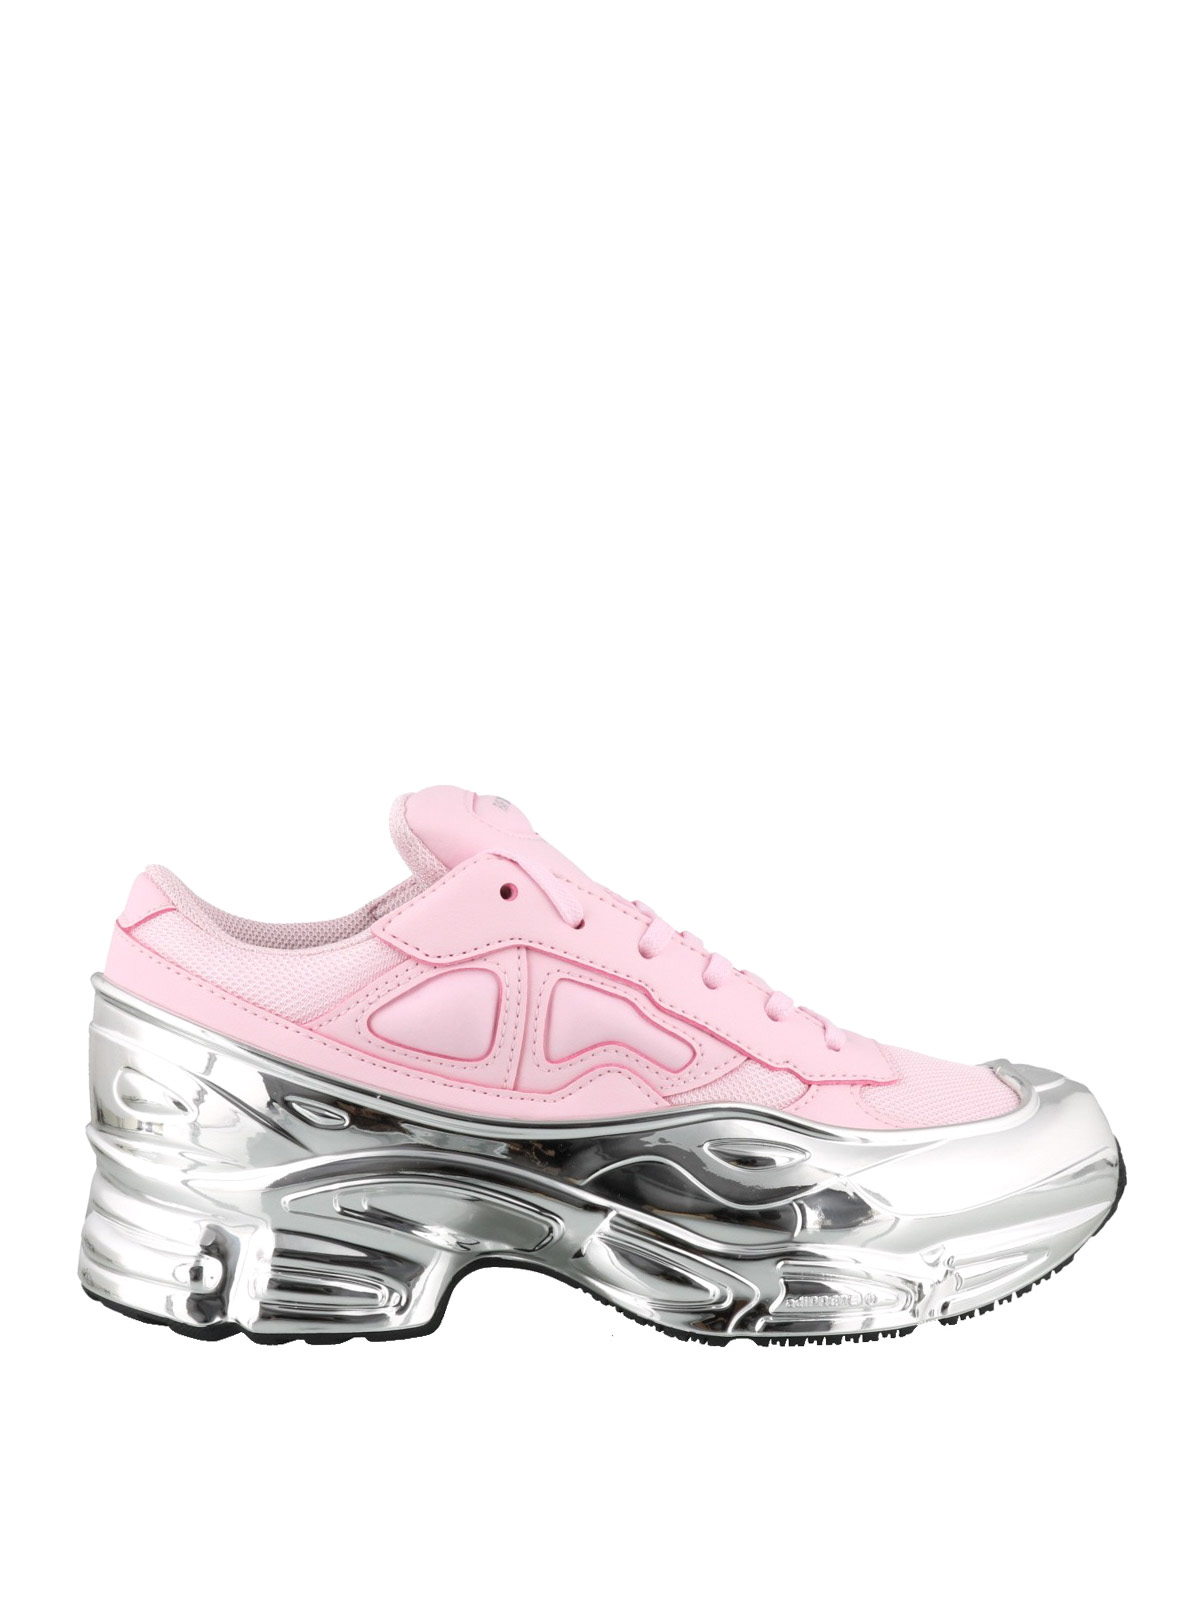 Raf Simons Adidas - Sneaker Ozweego RS rosa e argento - sneakers -  EE7947PINKSILVERSILVER